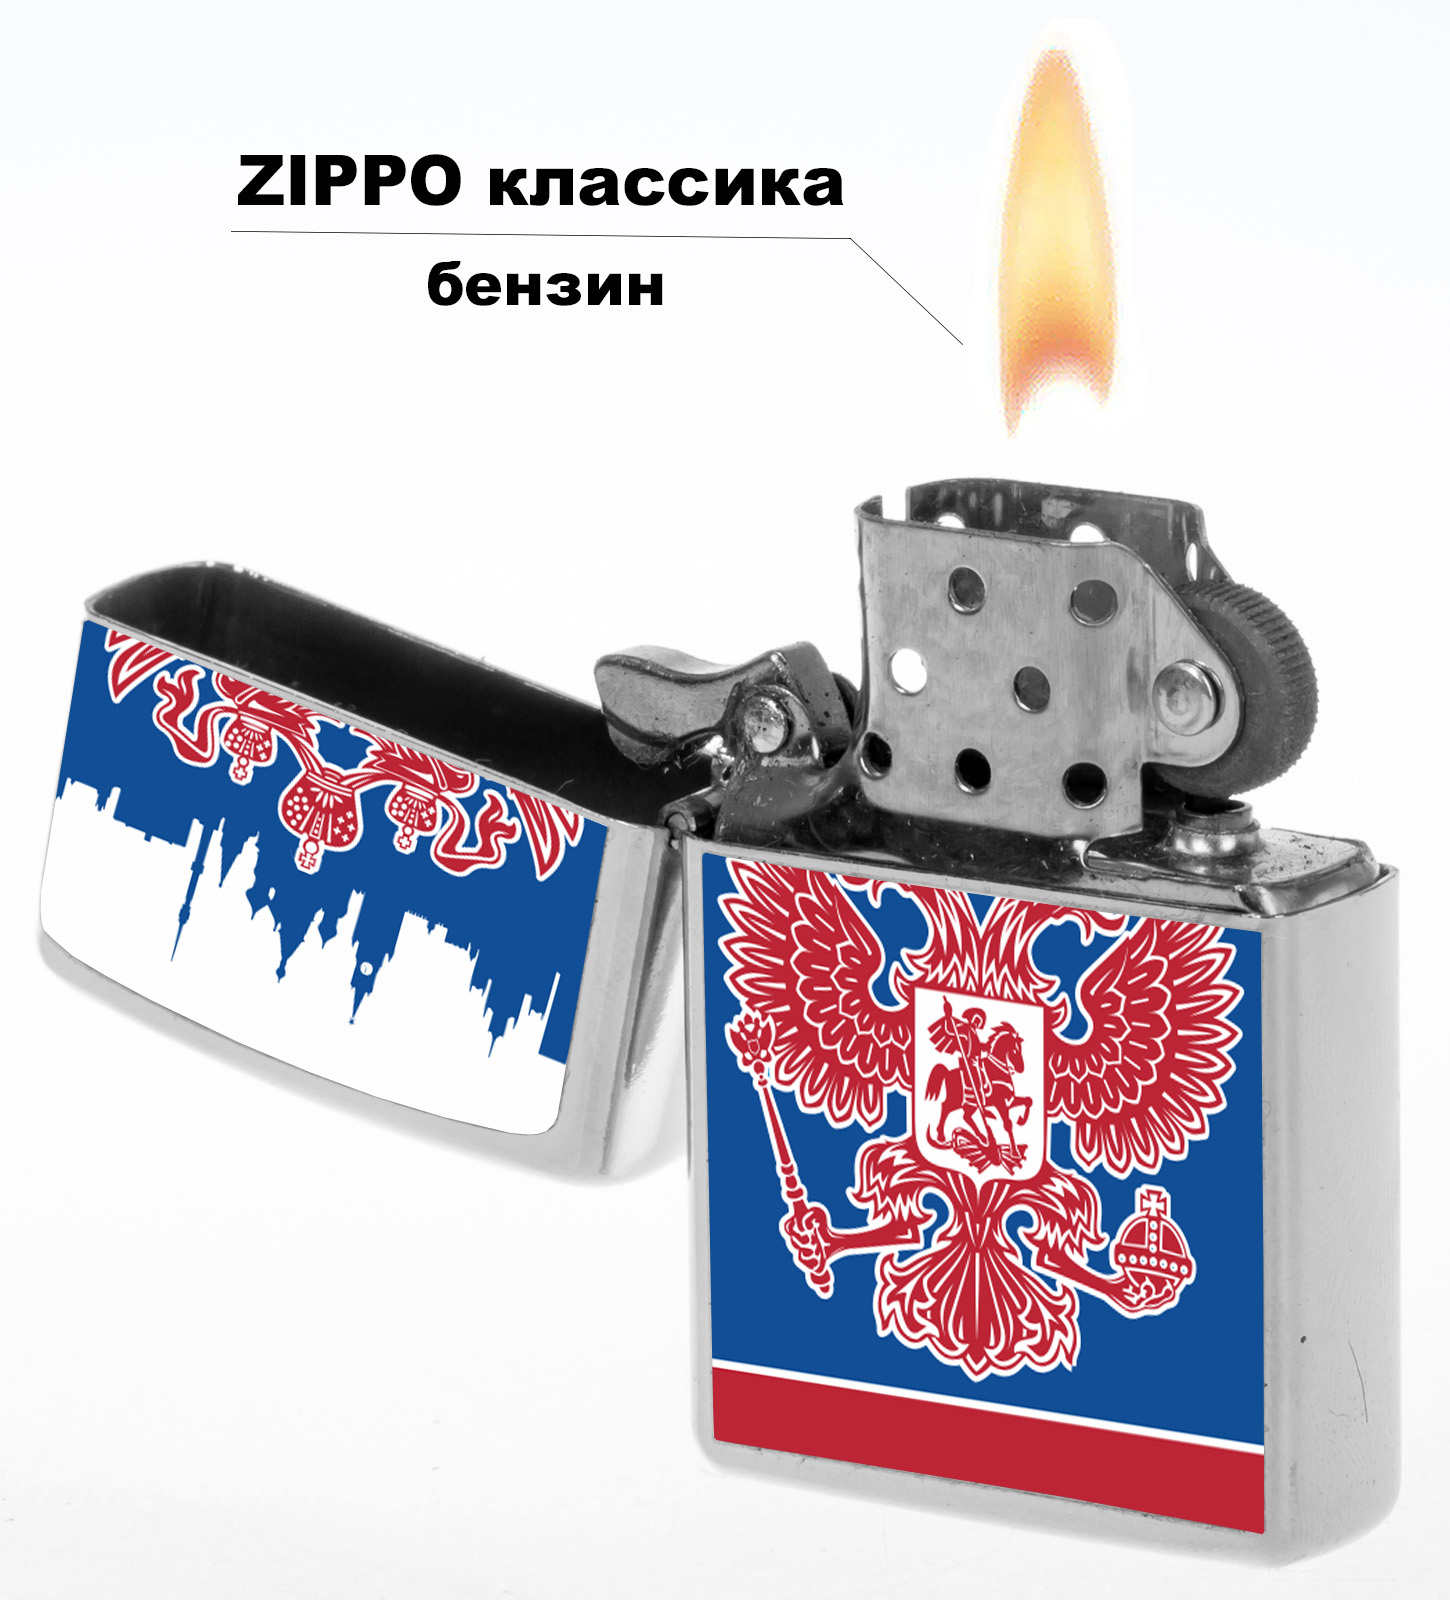 Патриотичная зажигалка с Гербом РФ 